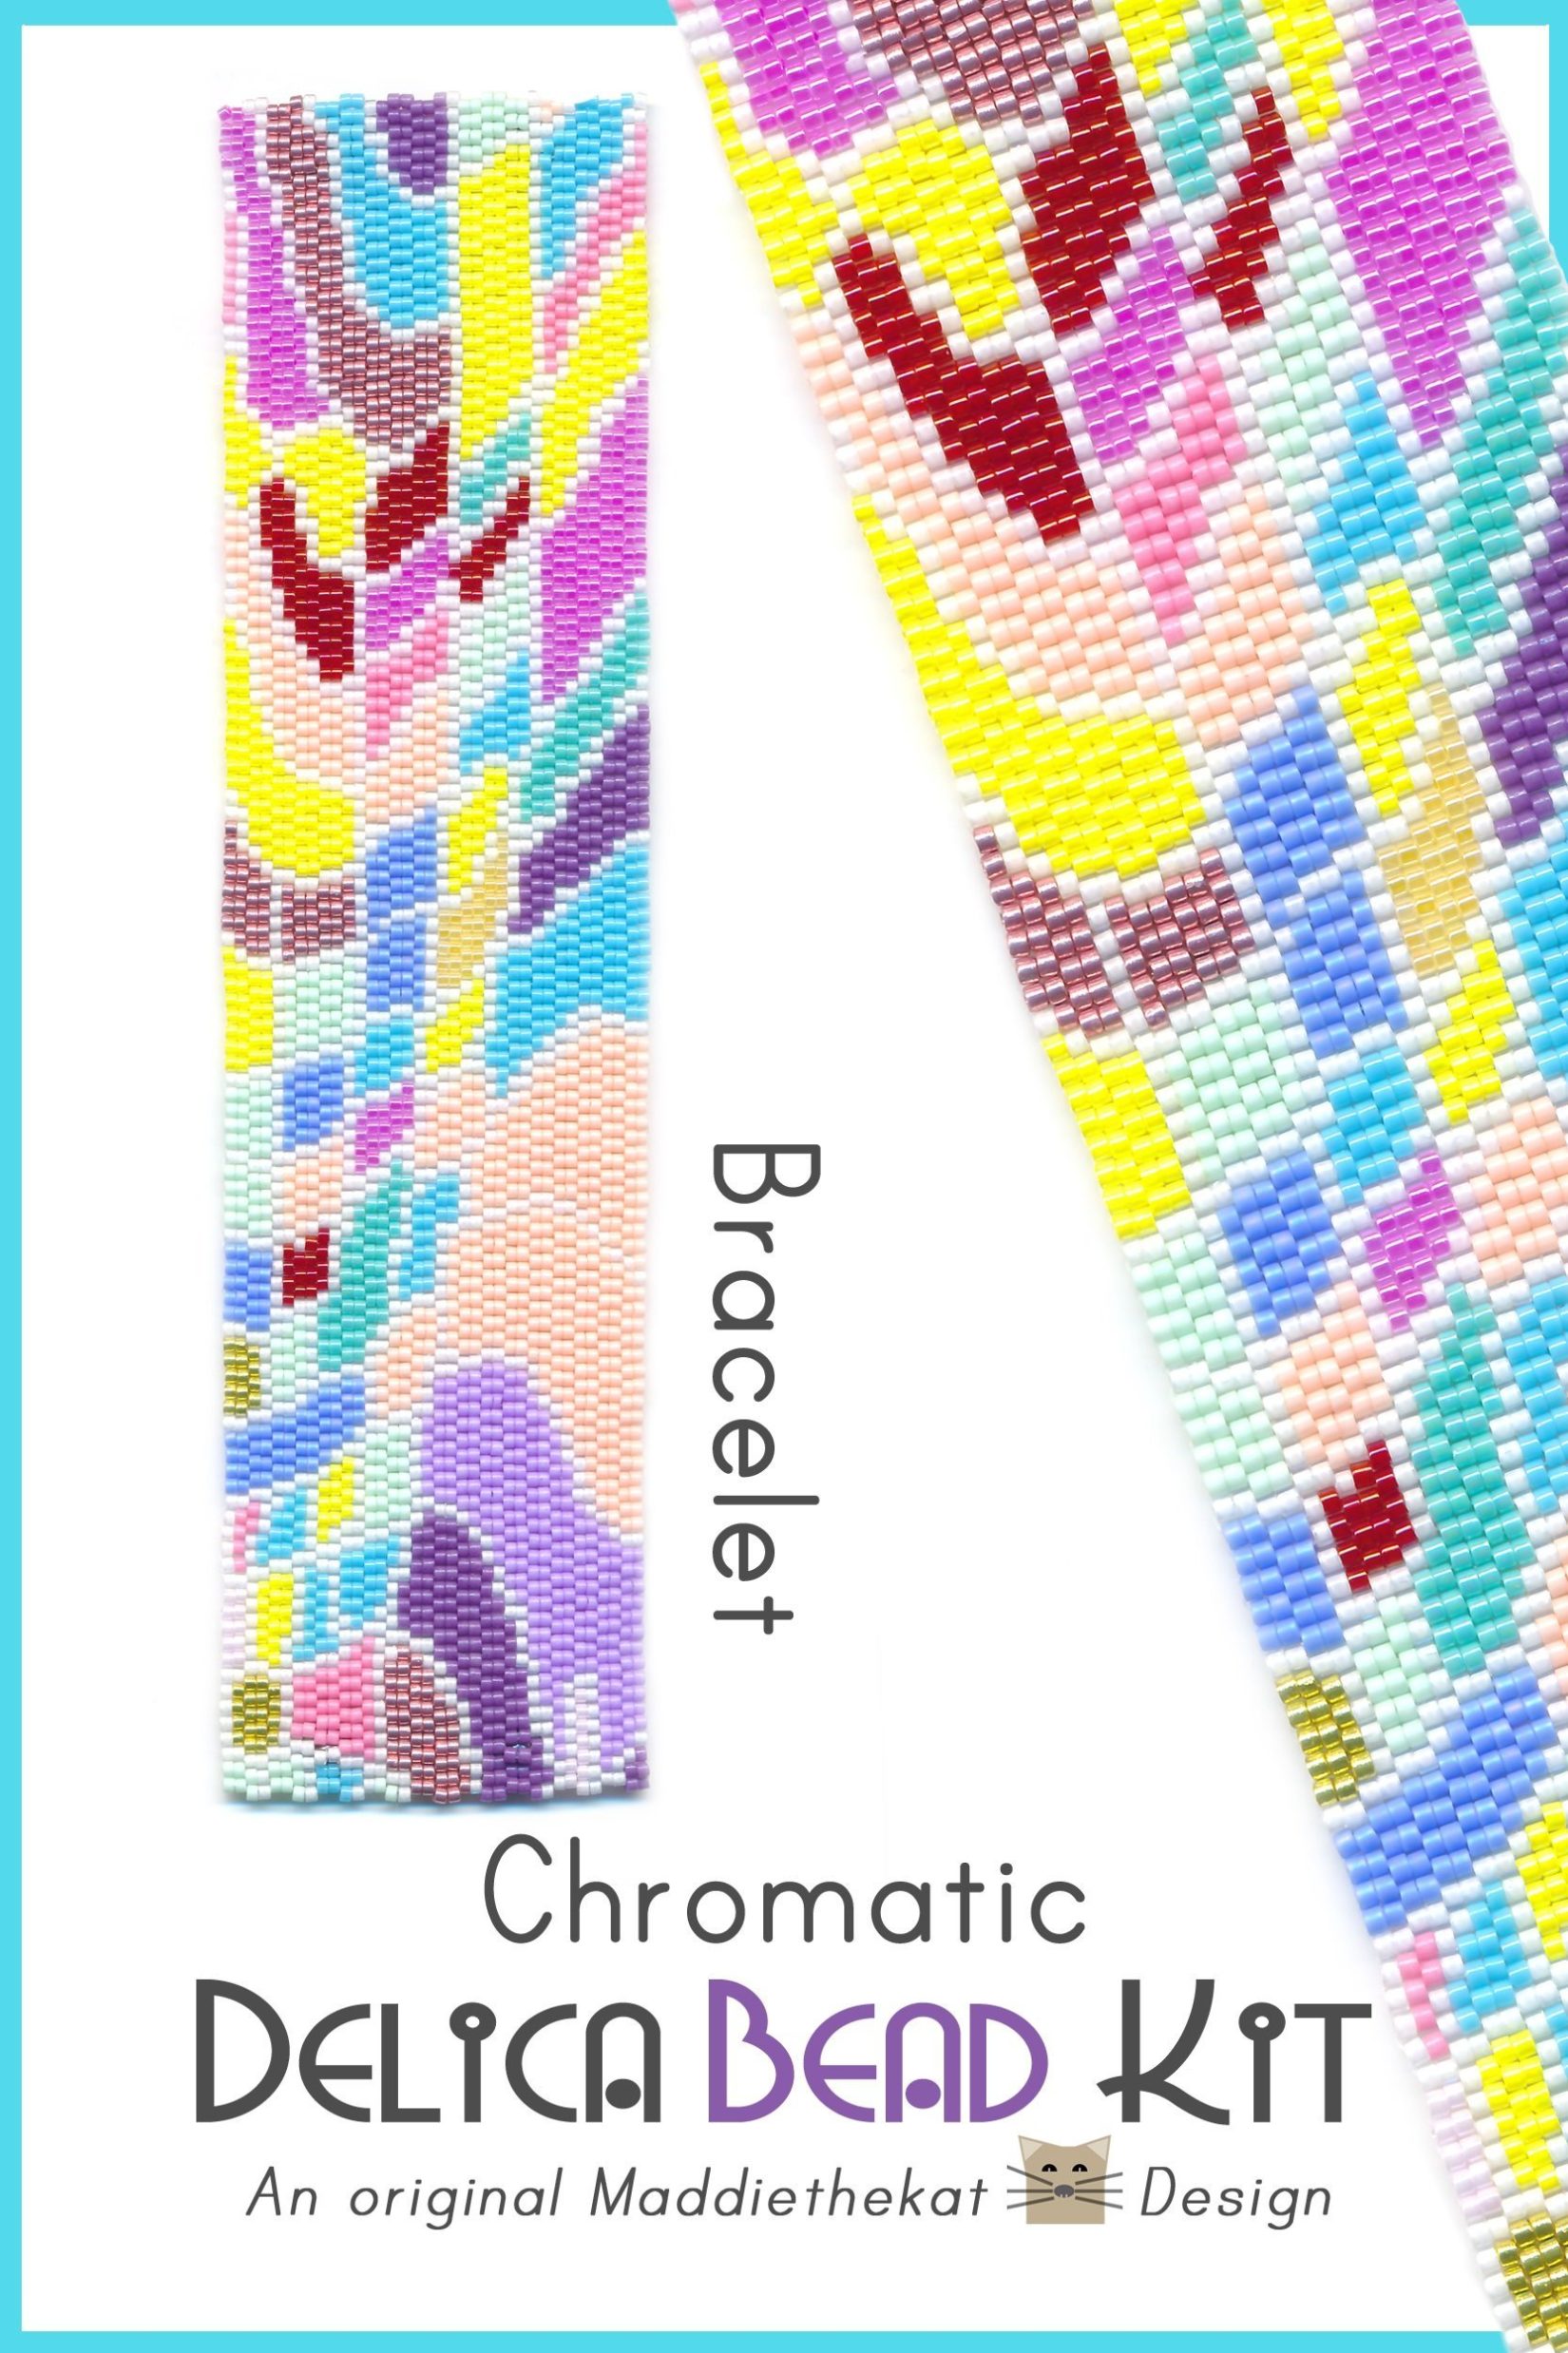 Chromatic Wide Cuff Bracelet 2-Drop Peyote Bead Pattern or Bead Kit